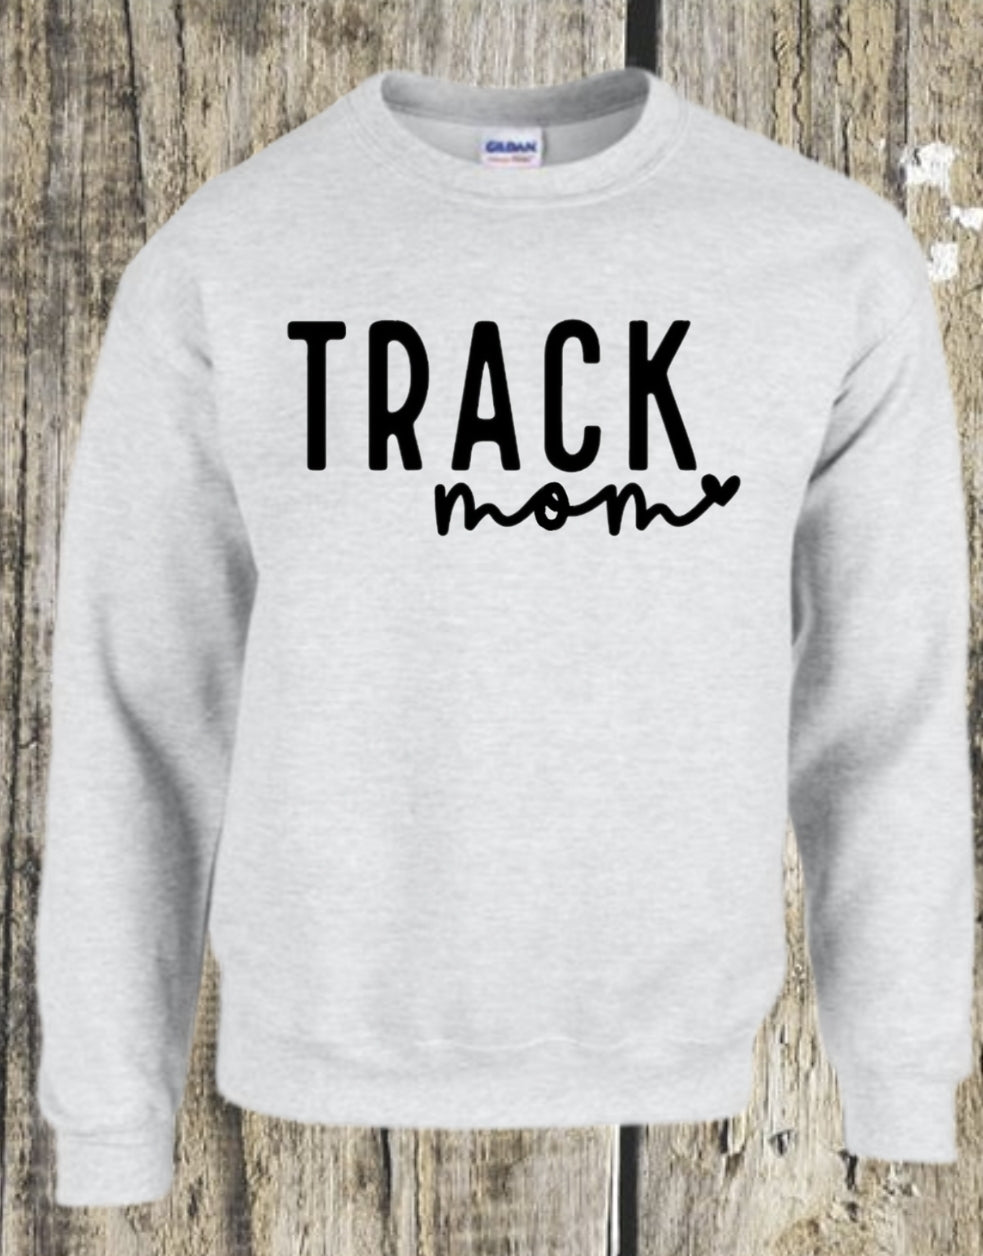 Track Mom (#2)